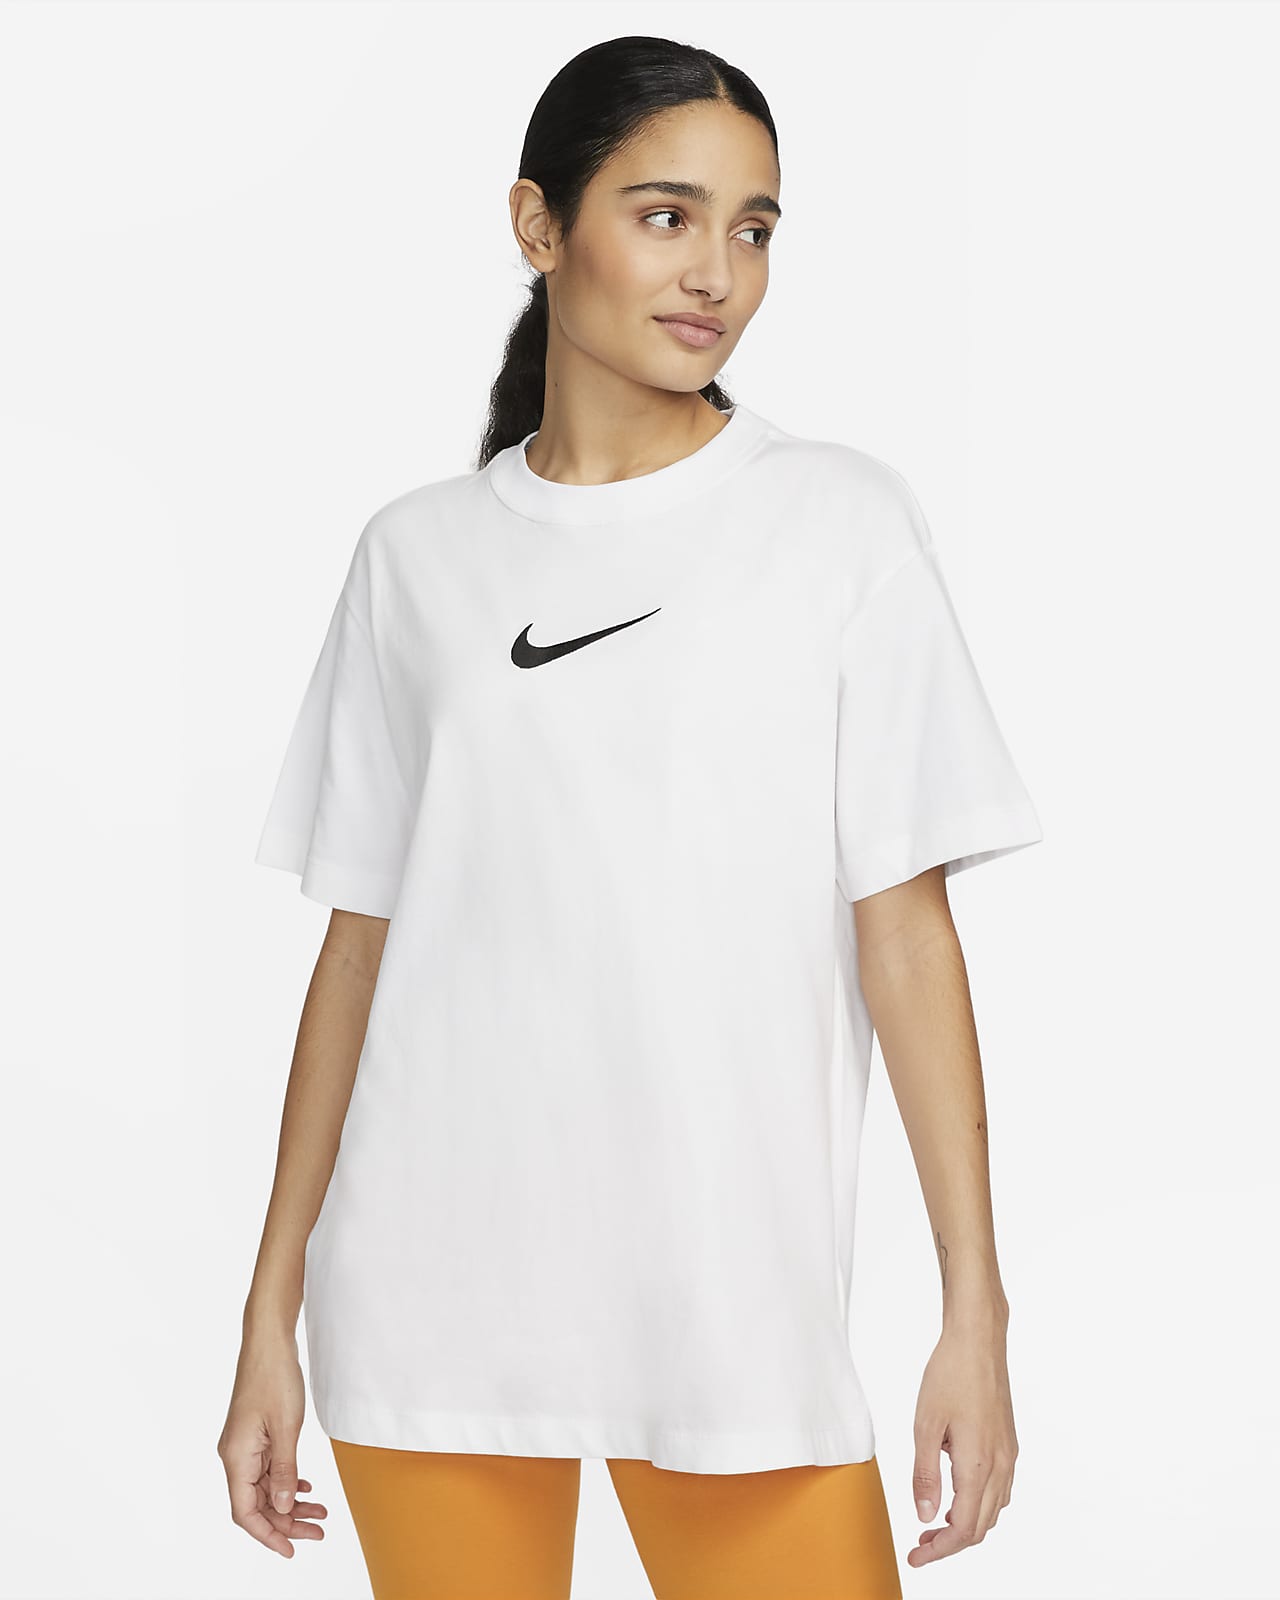 Nike Sportswear Women's T-Shirt. Nike